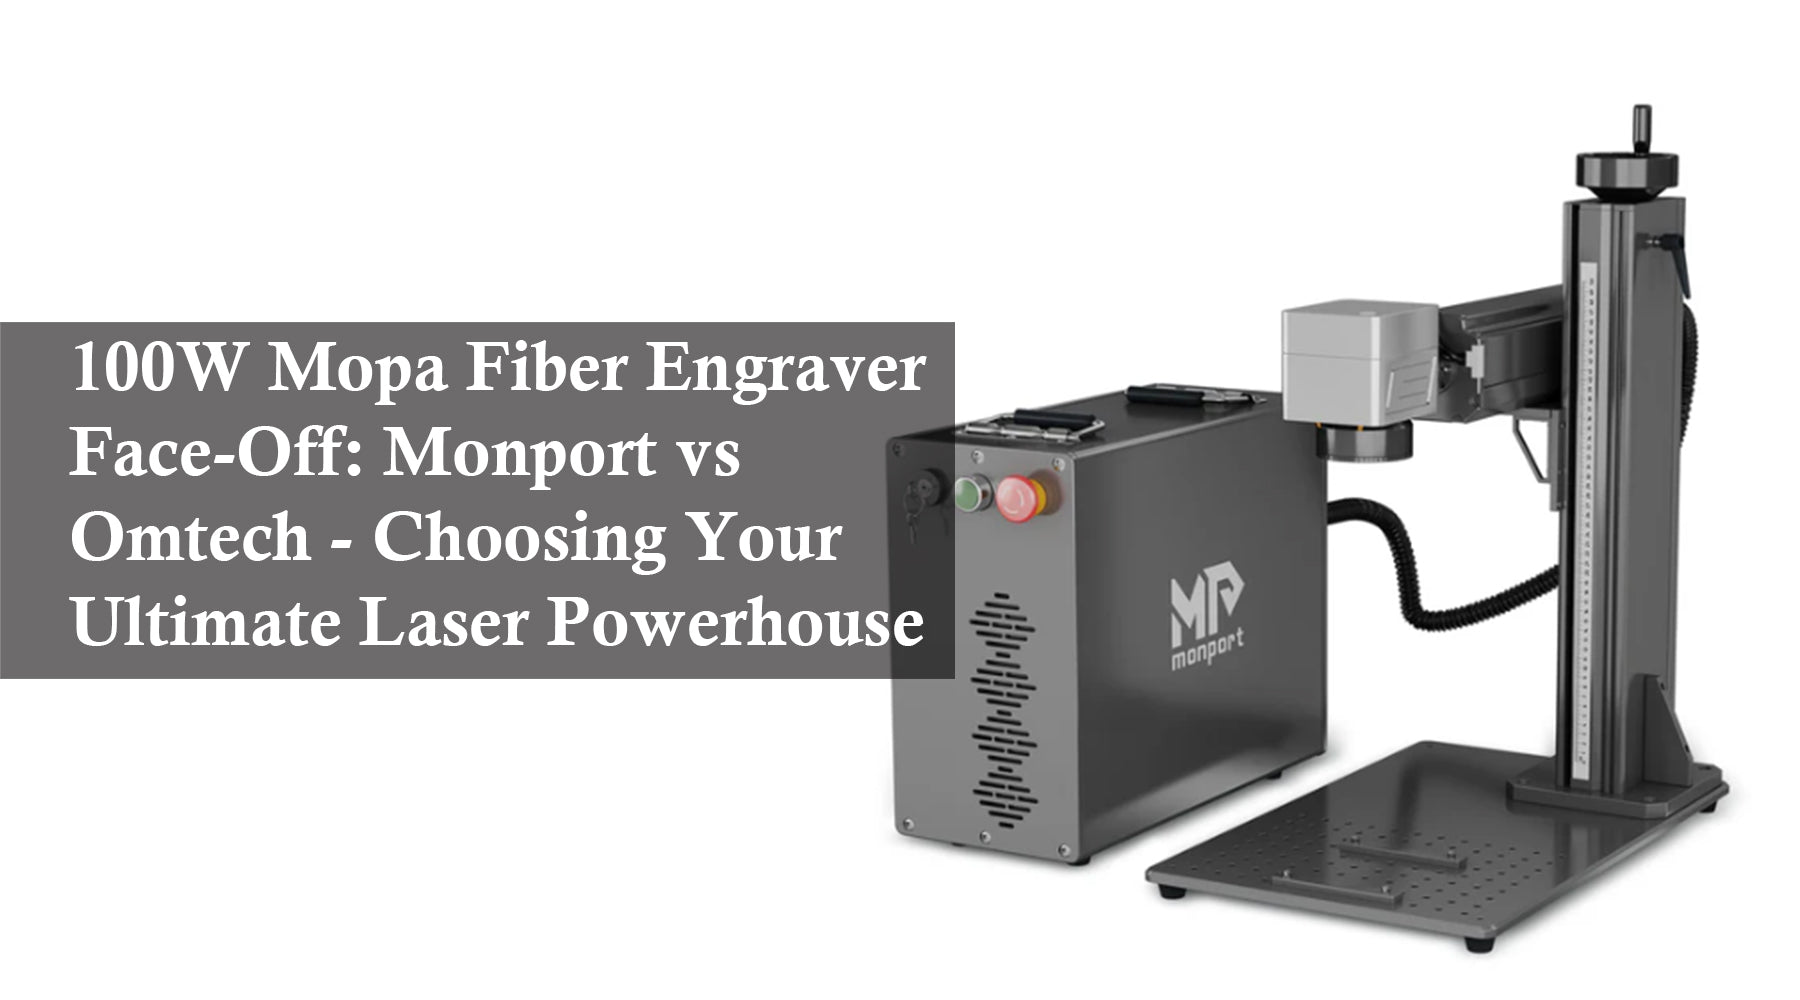 100W Mopa Fiber Engraver Face-Off: Monport vs Omtech - Choosing Your Ultimate Laser Powerhouse